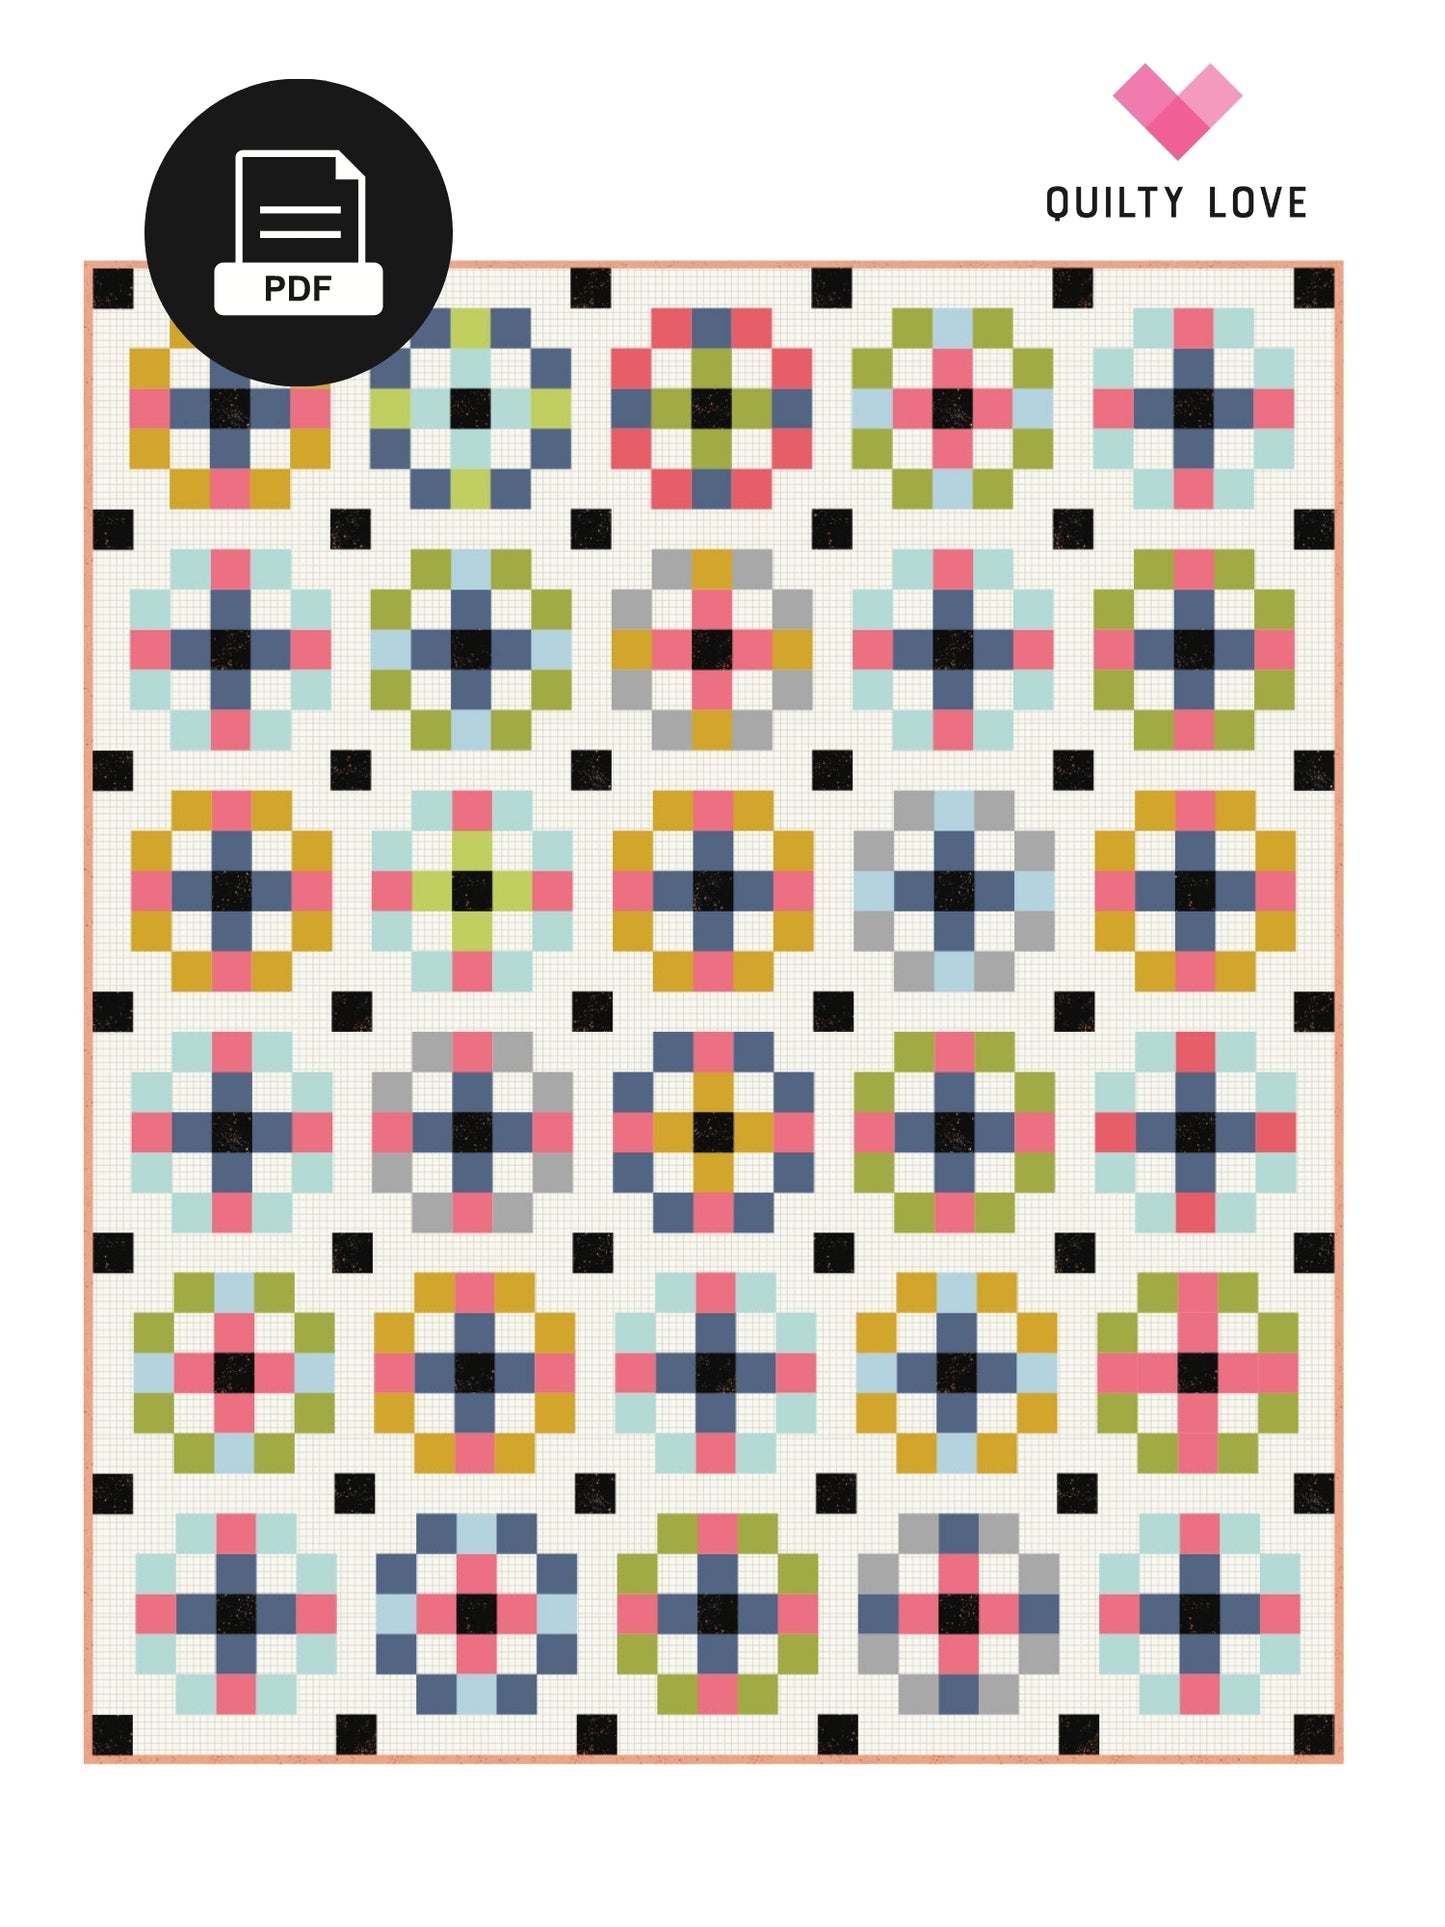 Crossroads PDF Quilt Pattern - Digital Download